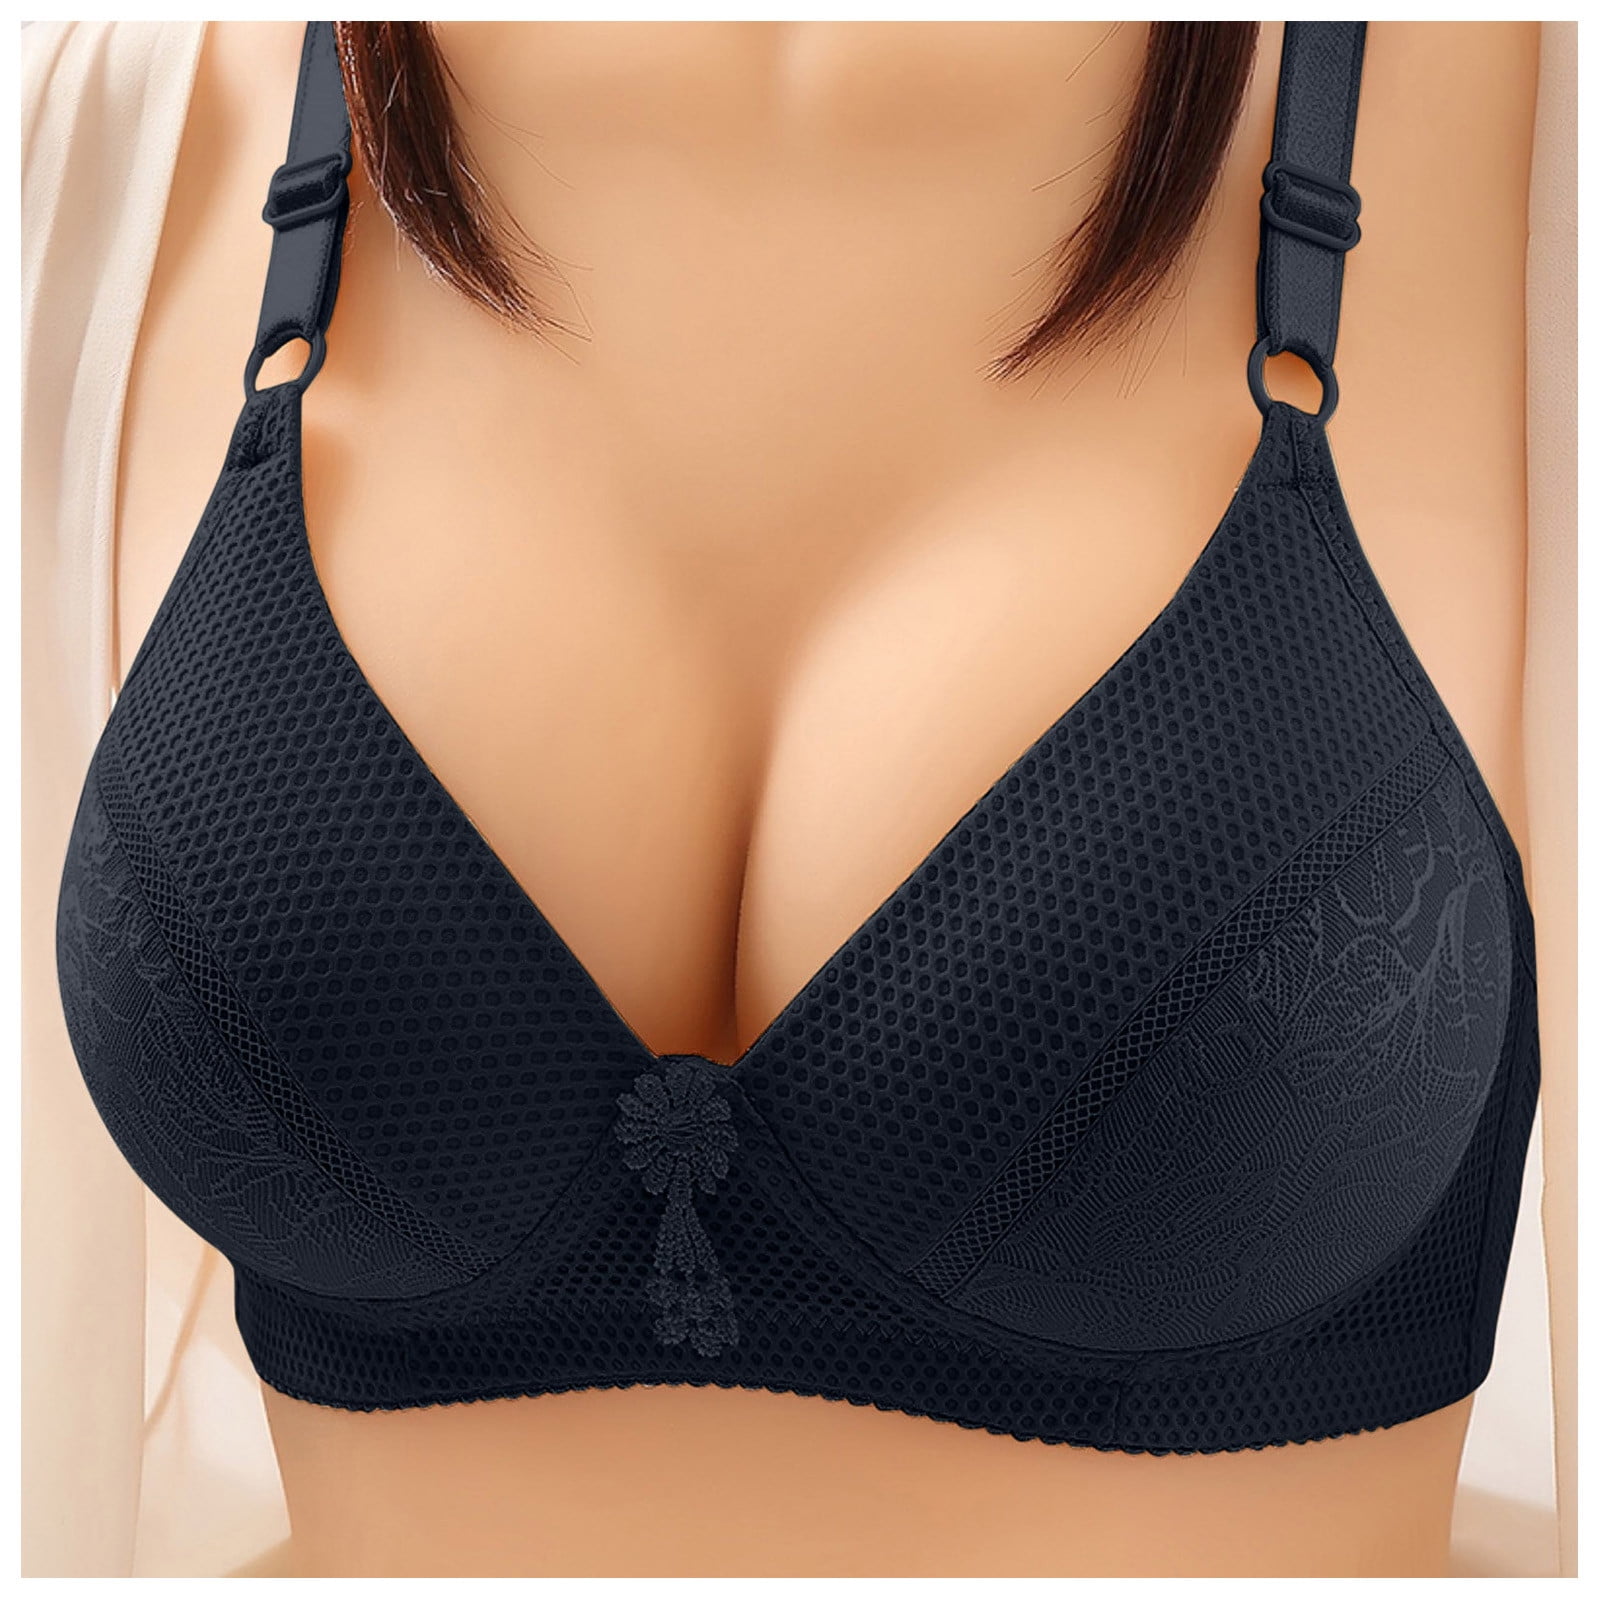 Summer Latex Crystal Cup Underwear Woman Thin Big Breast Shows